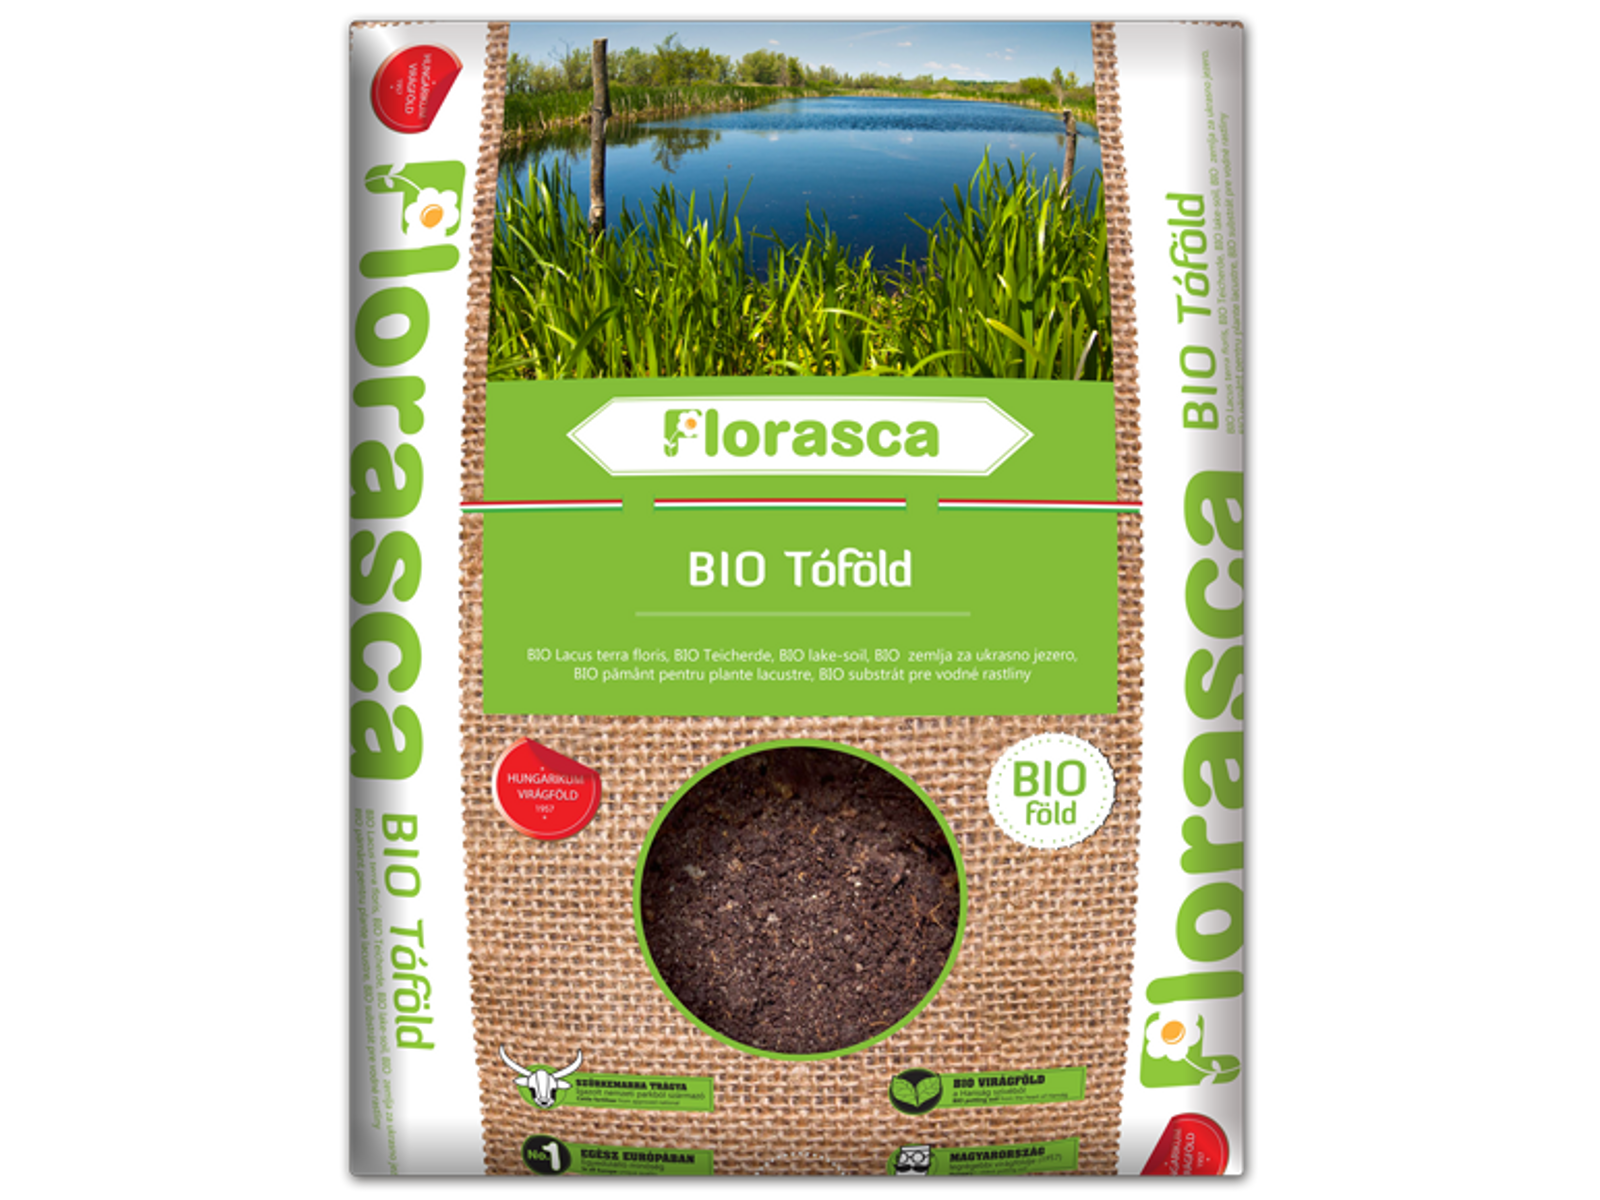 Florasca biotóföld - 40 liter